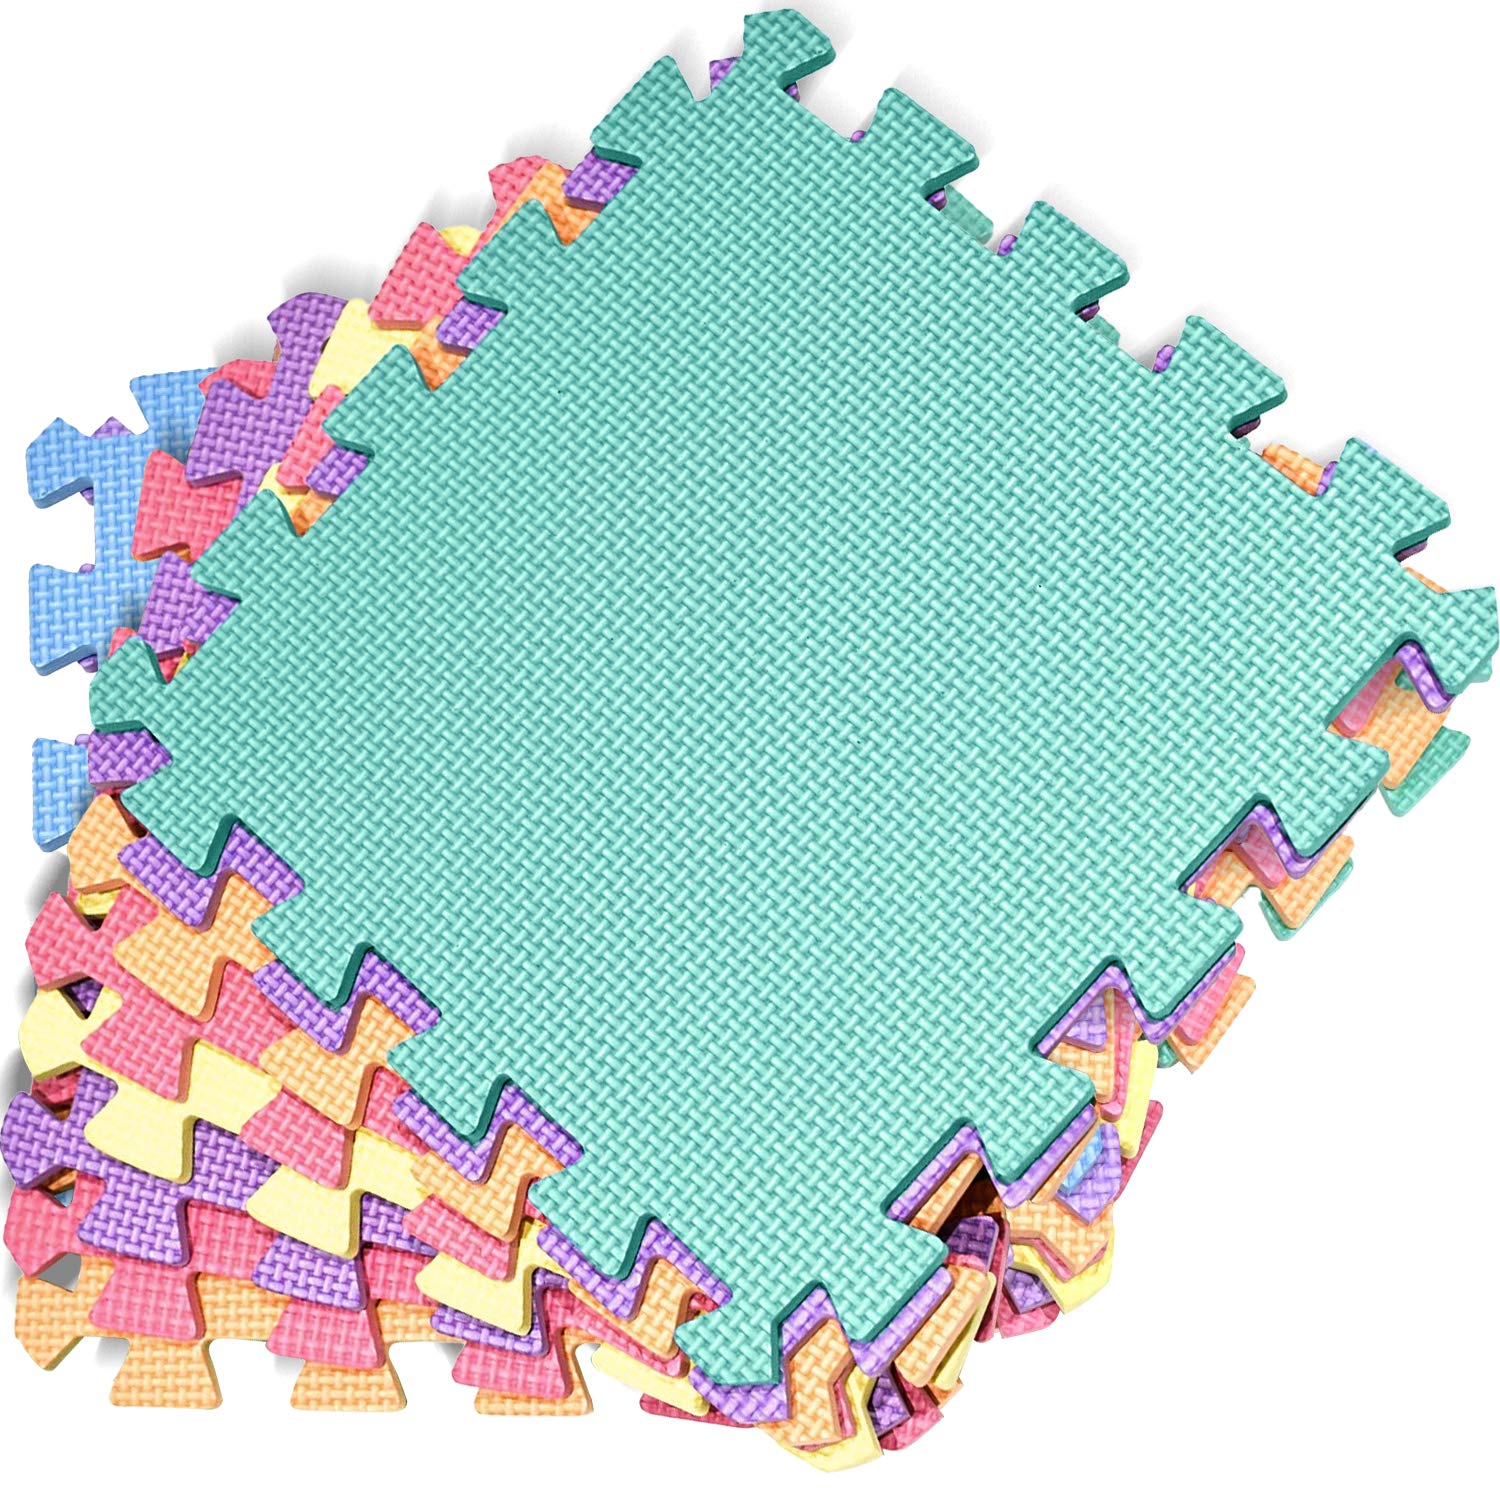 kidoola Foam Baby Play Mat (29x29cm) – Thick & Soft EVA Foam Interlocking Floor Tile Matting for Children – Large Multi Colour, Safe & Comfortable 7mm Thick Play Flooring (9pc)